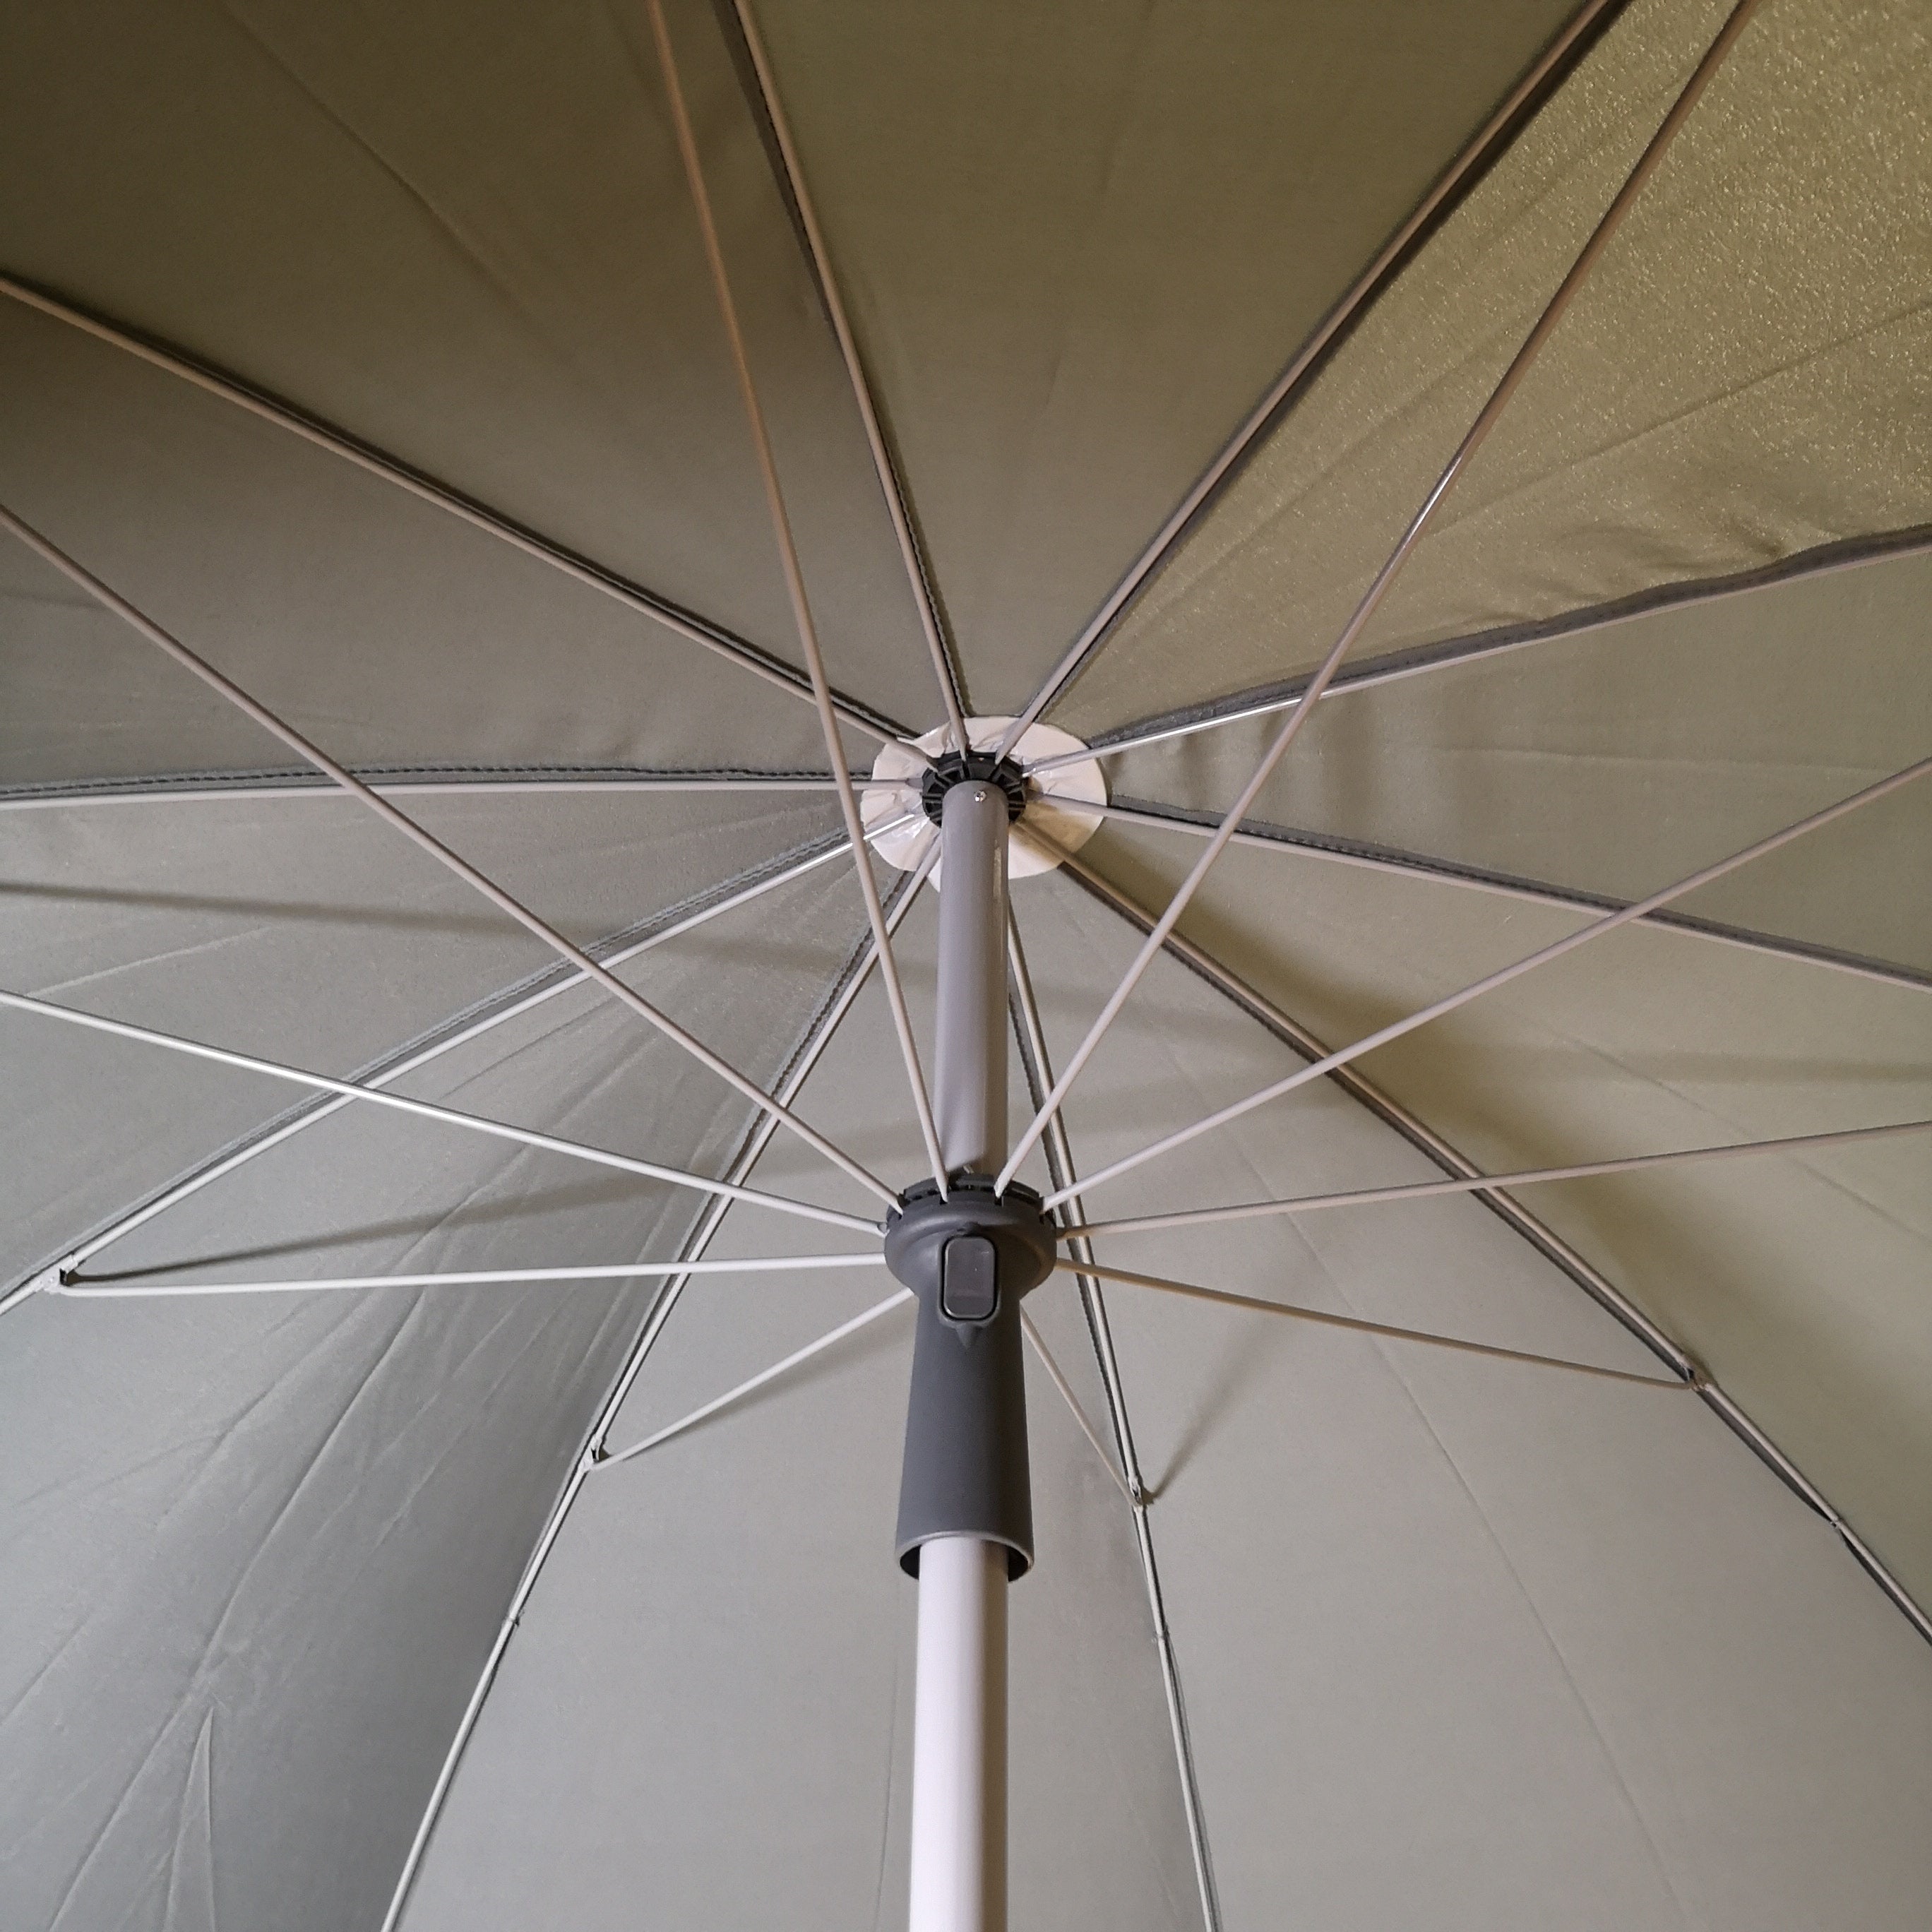 2.5m Extending Parasol Umbrella with Tilt Action for Garden or Patio in Grey